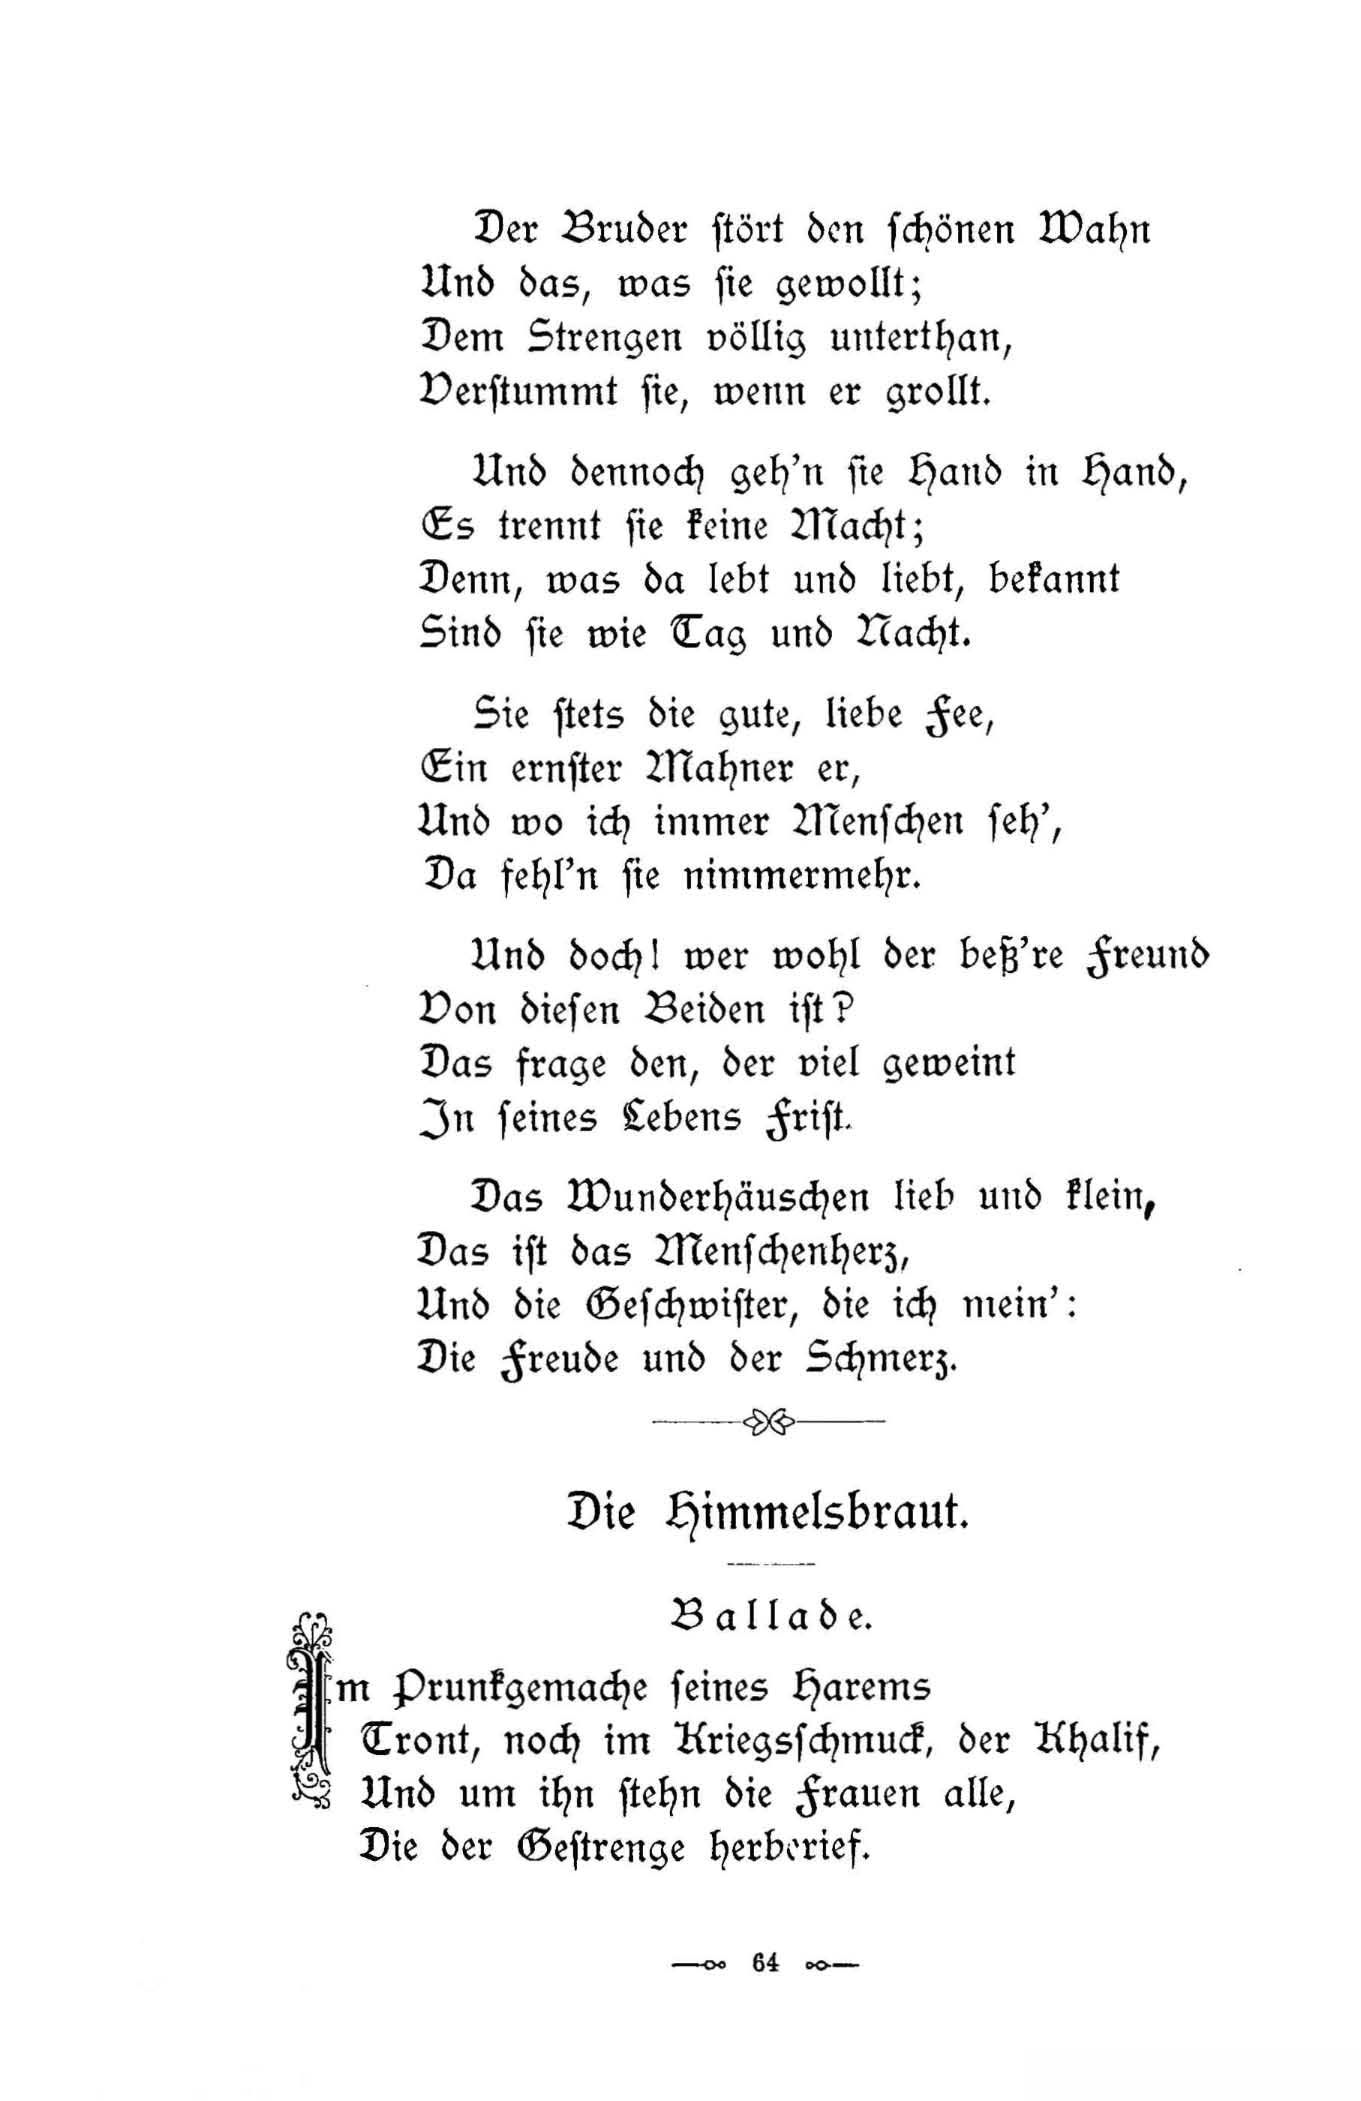 Die Himmelsbraut (1896) | 1. (64) Haupttext